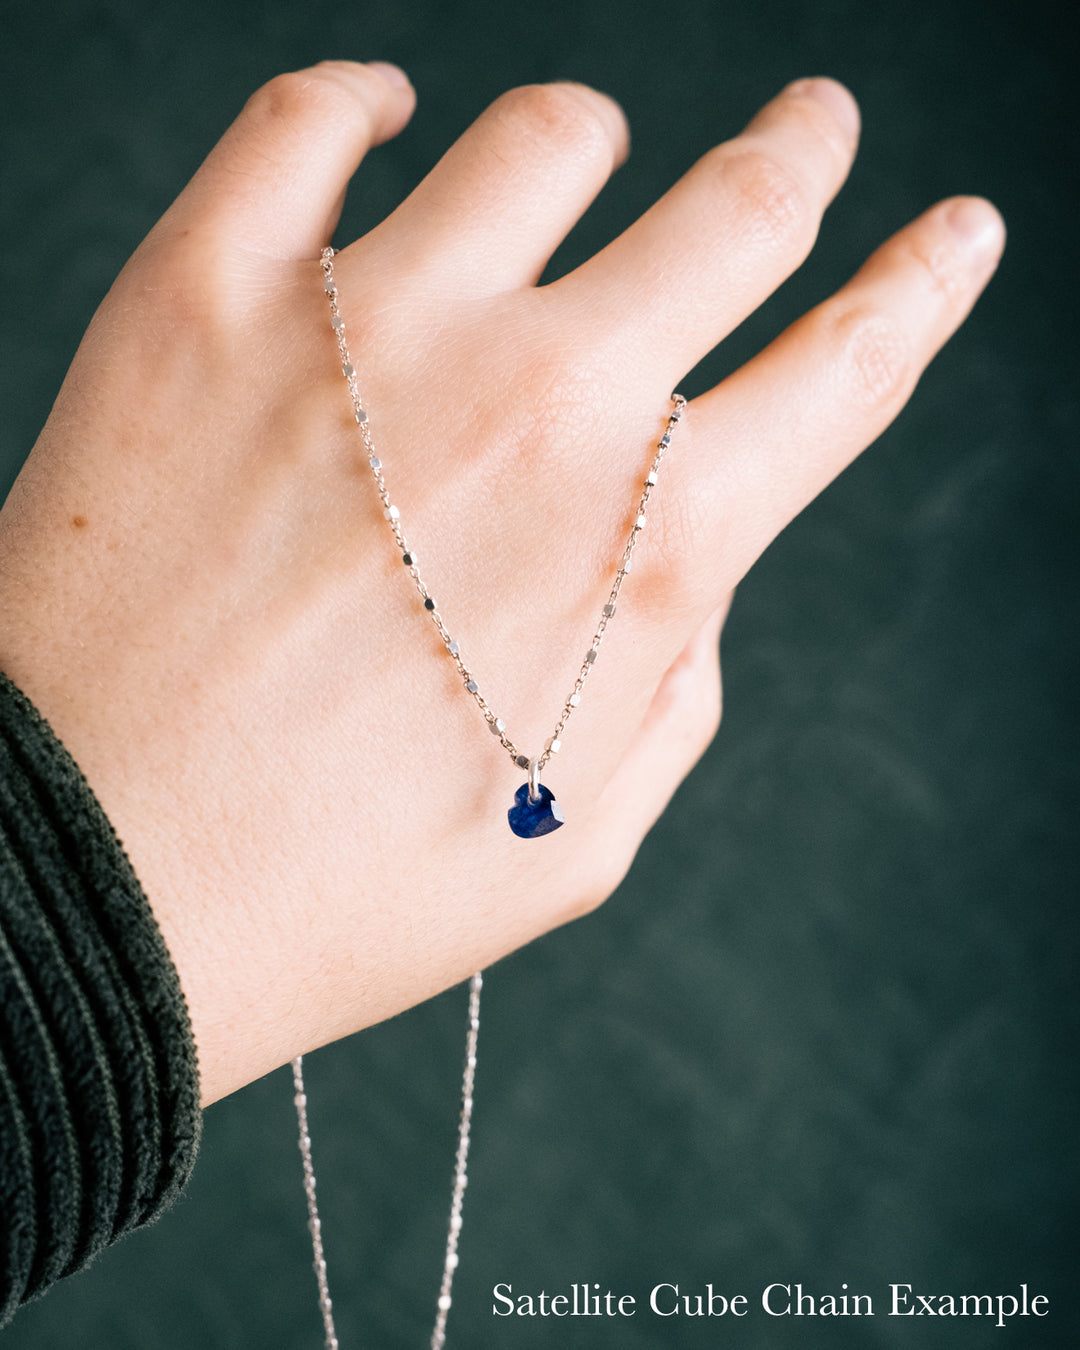 Mini Garnet Heart Necklace - The Healing Pear